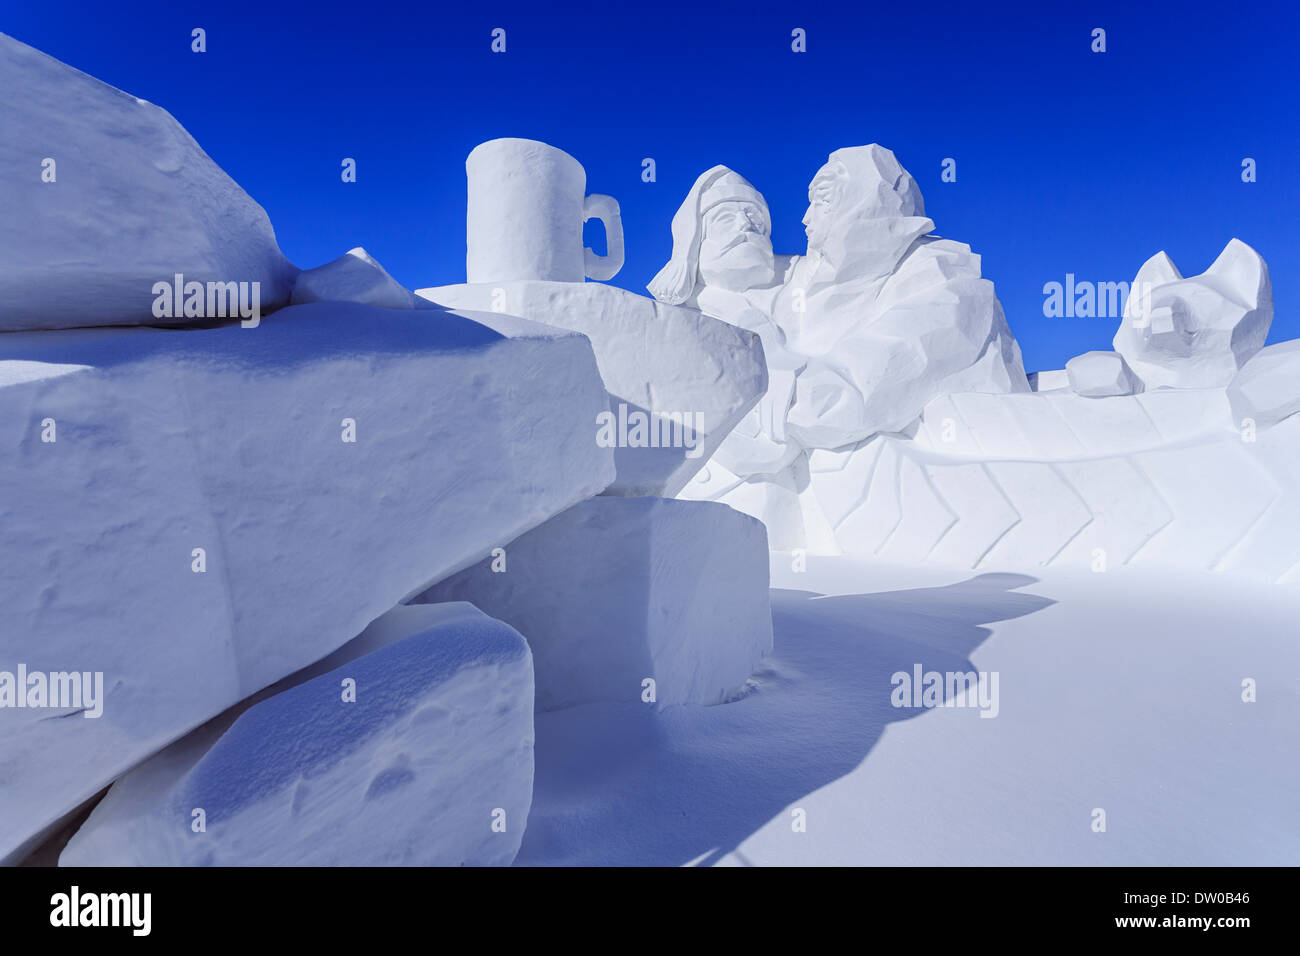 Snow sculpture at Festival du Voyageur, Winnipeg, Manitoba, Canada Stock Photo